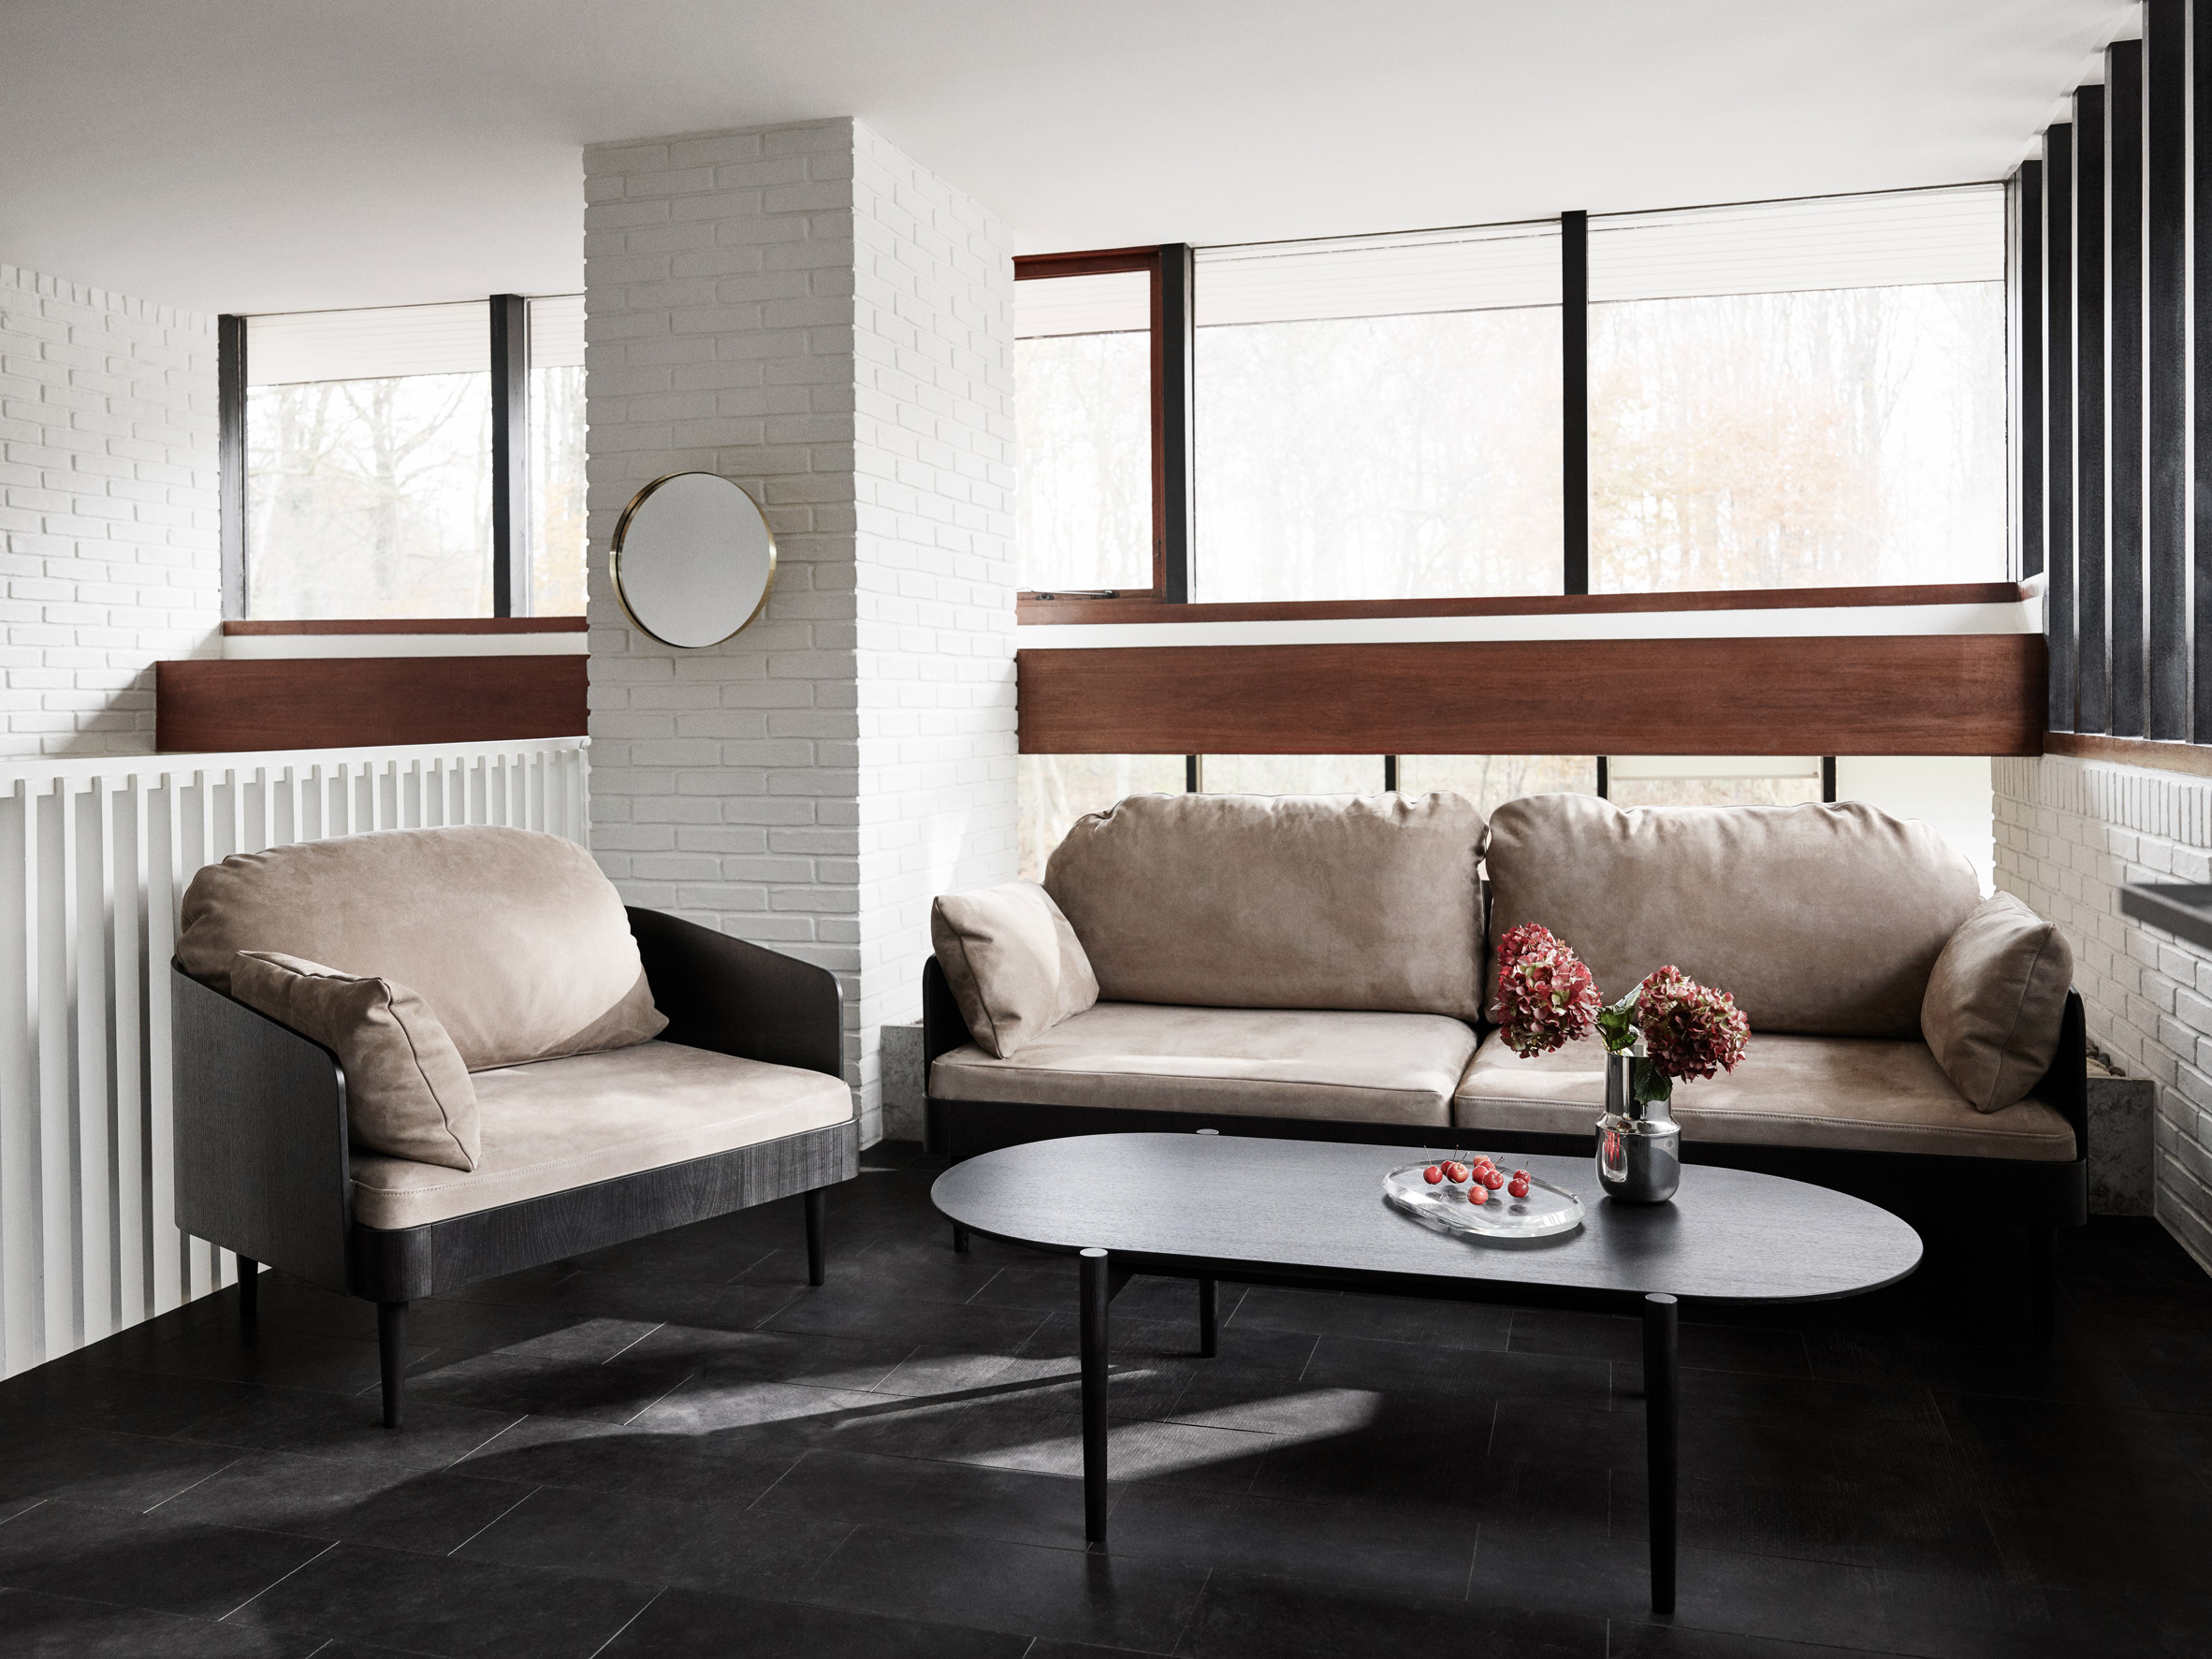 maison-objet-menu-design-furniture-lighting-tables_dezeen_2364_col_11